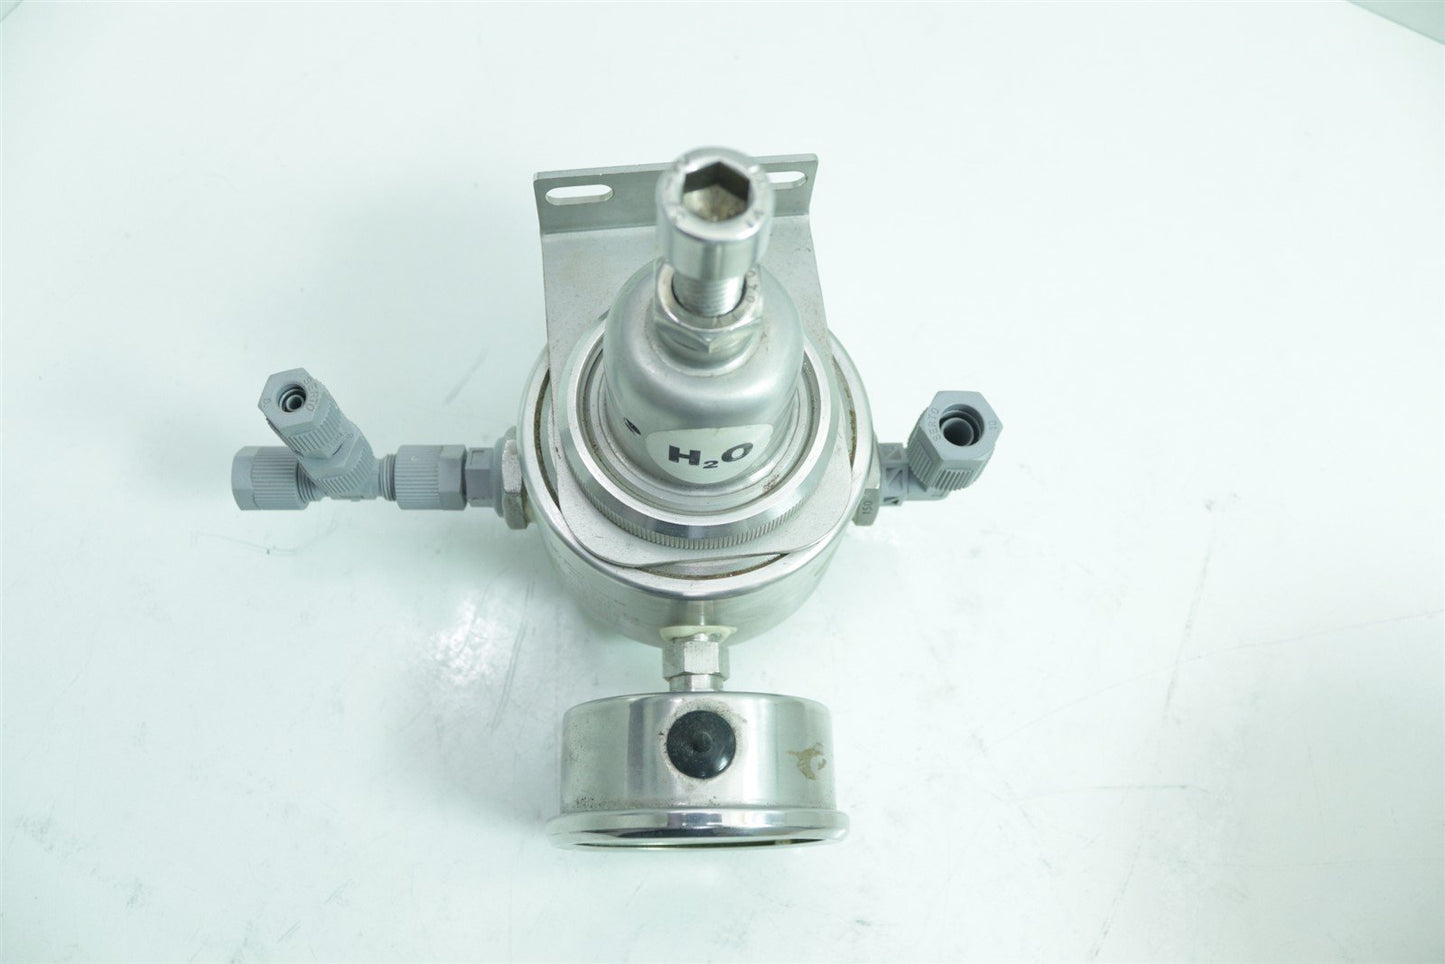 ID INSERT DEAL Water pressure regulator stainless steel R3121 PS 30